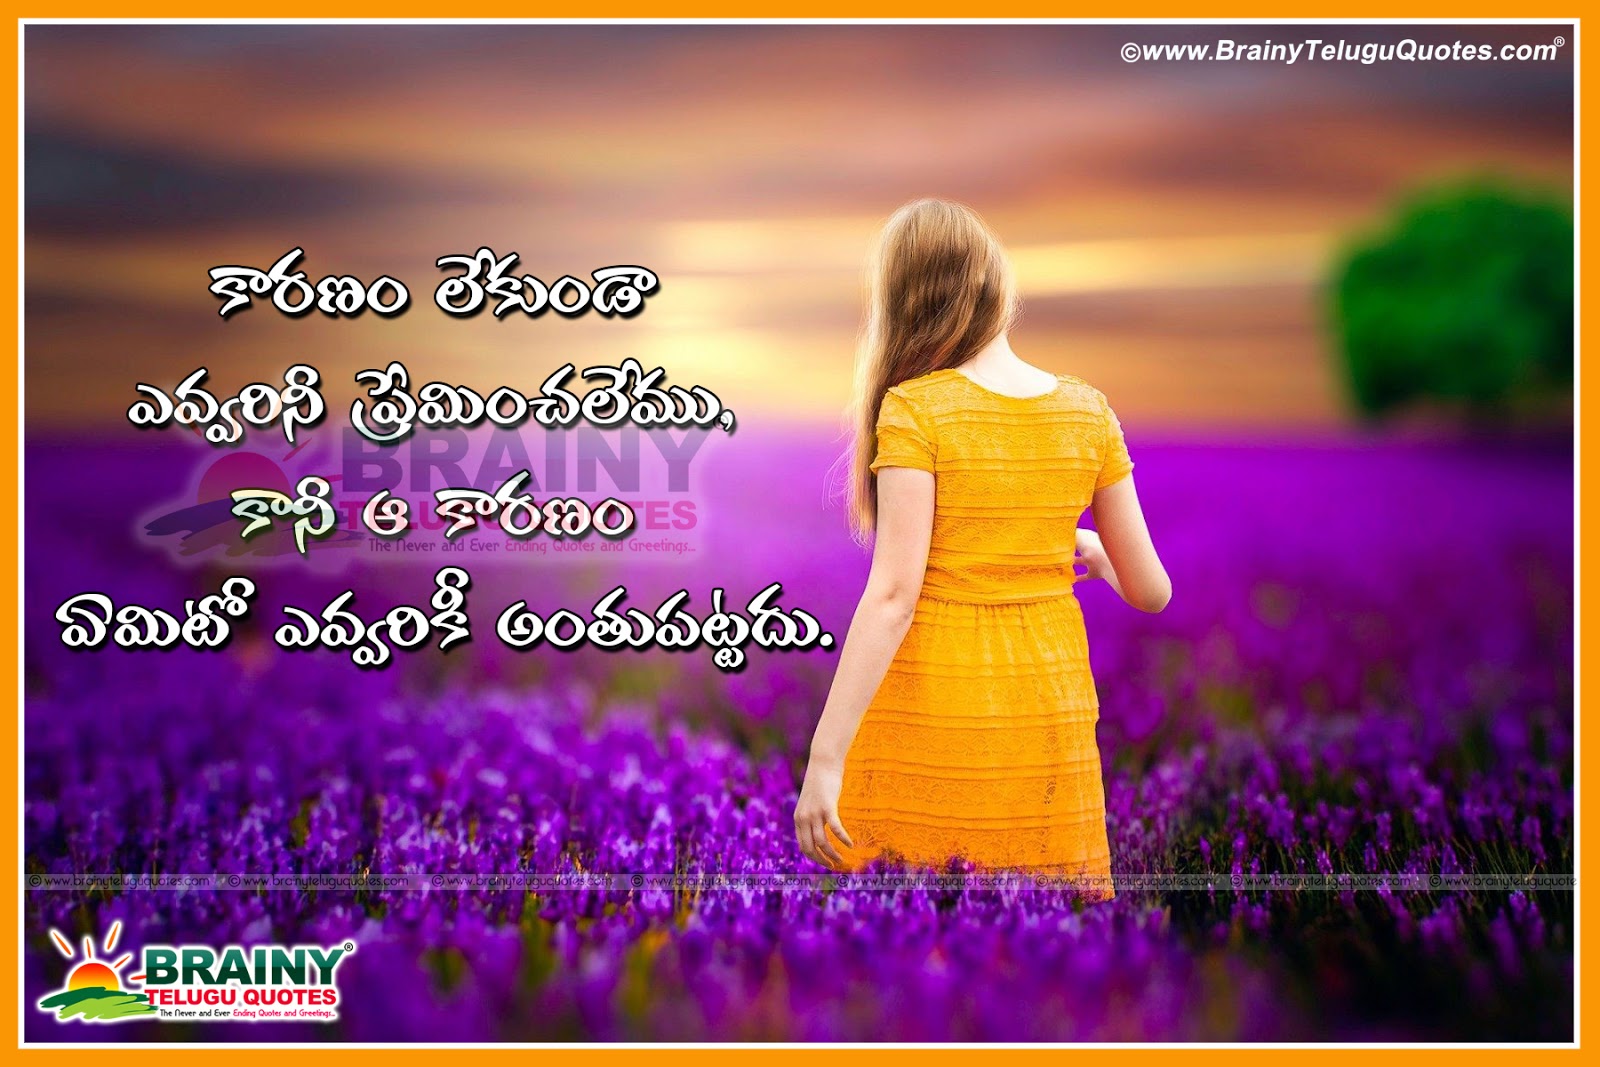 Here is a Telugu Language Nice Telugu Language Famous Miss You Love Quotes Doubt Love Quotations and Sayings in Telugu Language Popular Telugu Good Heart